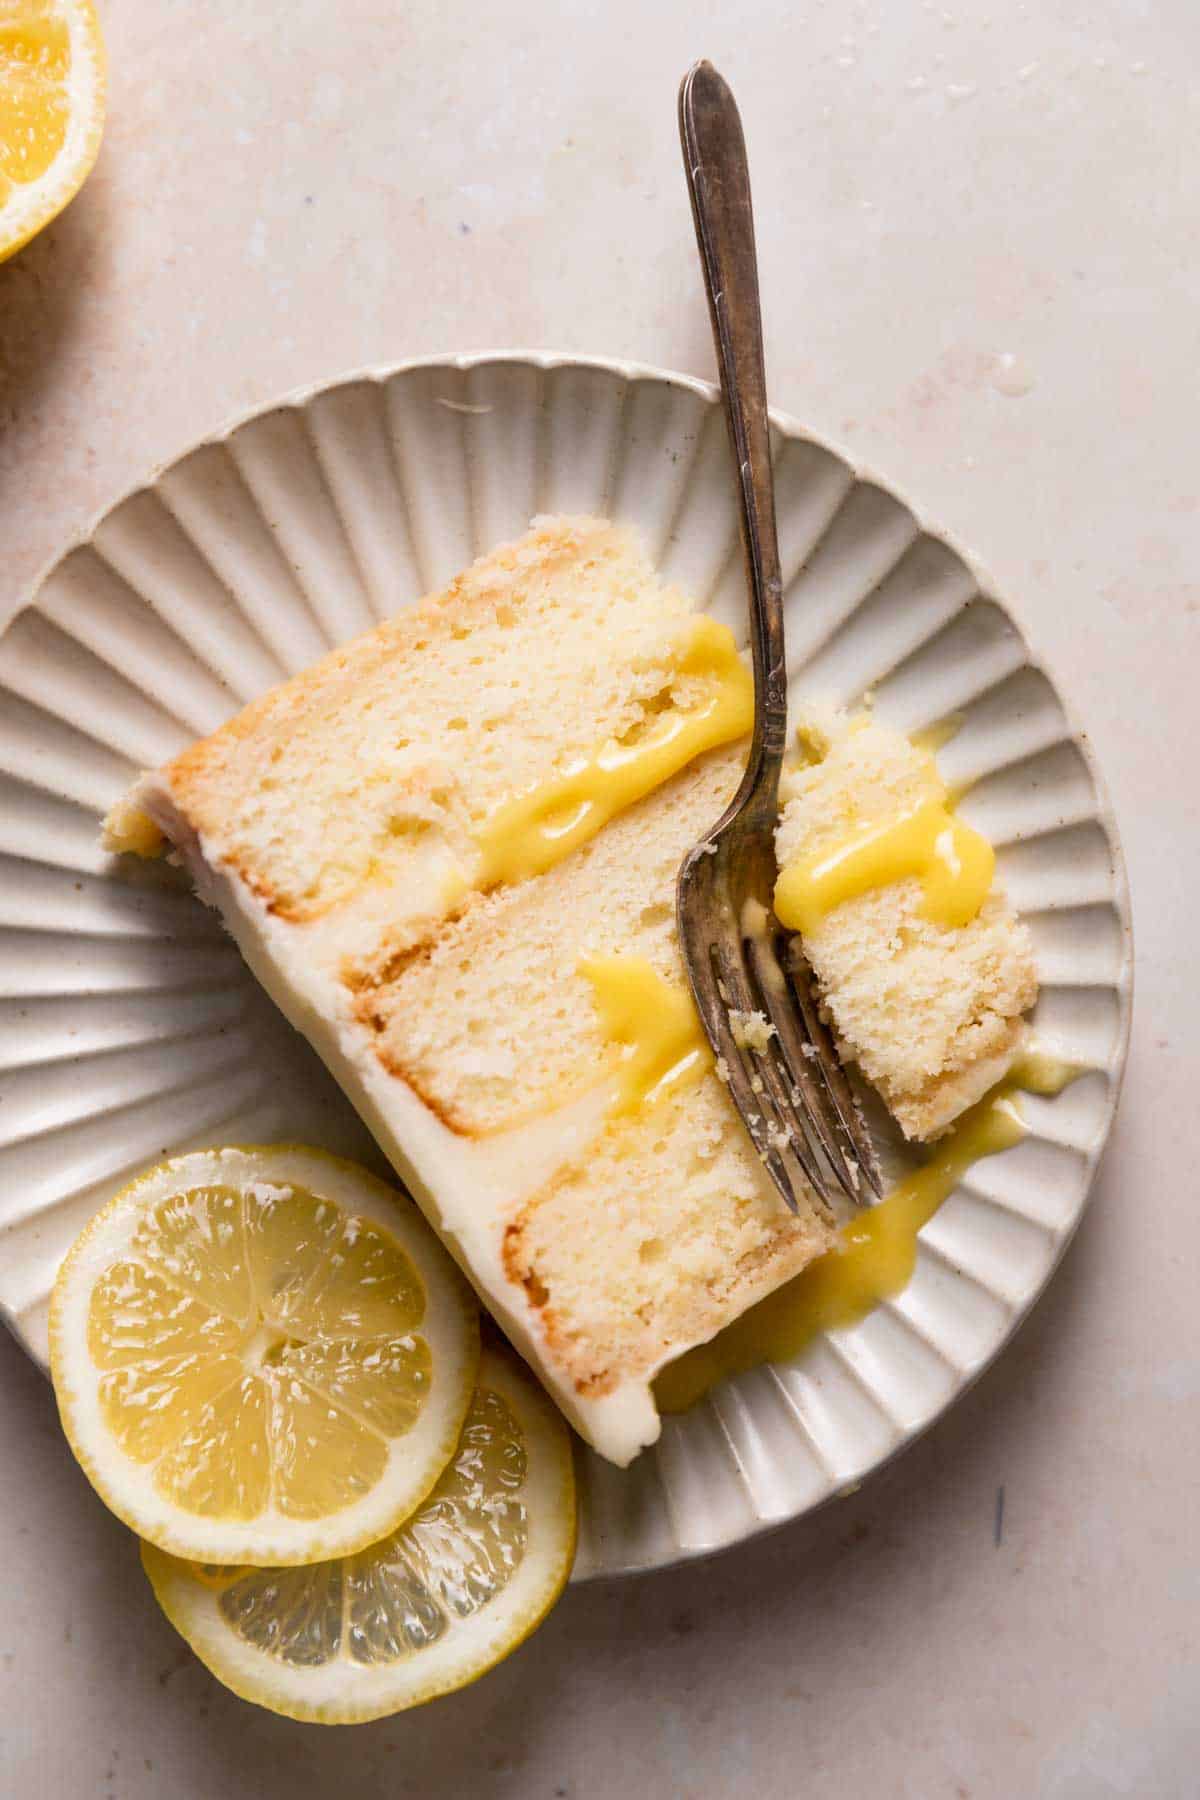 a slice of lemon bar cake on a white plate with fresh lemon slices.